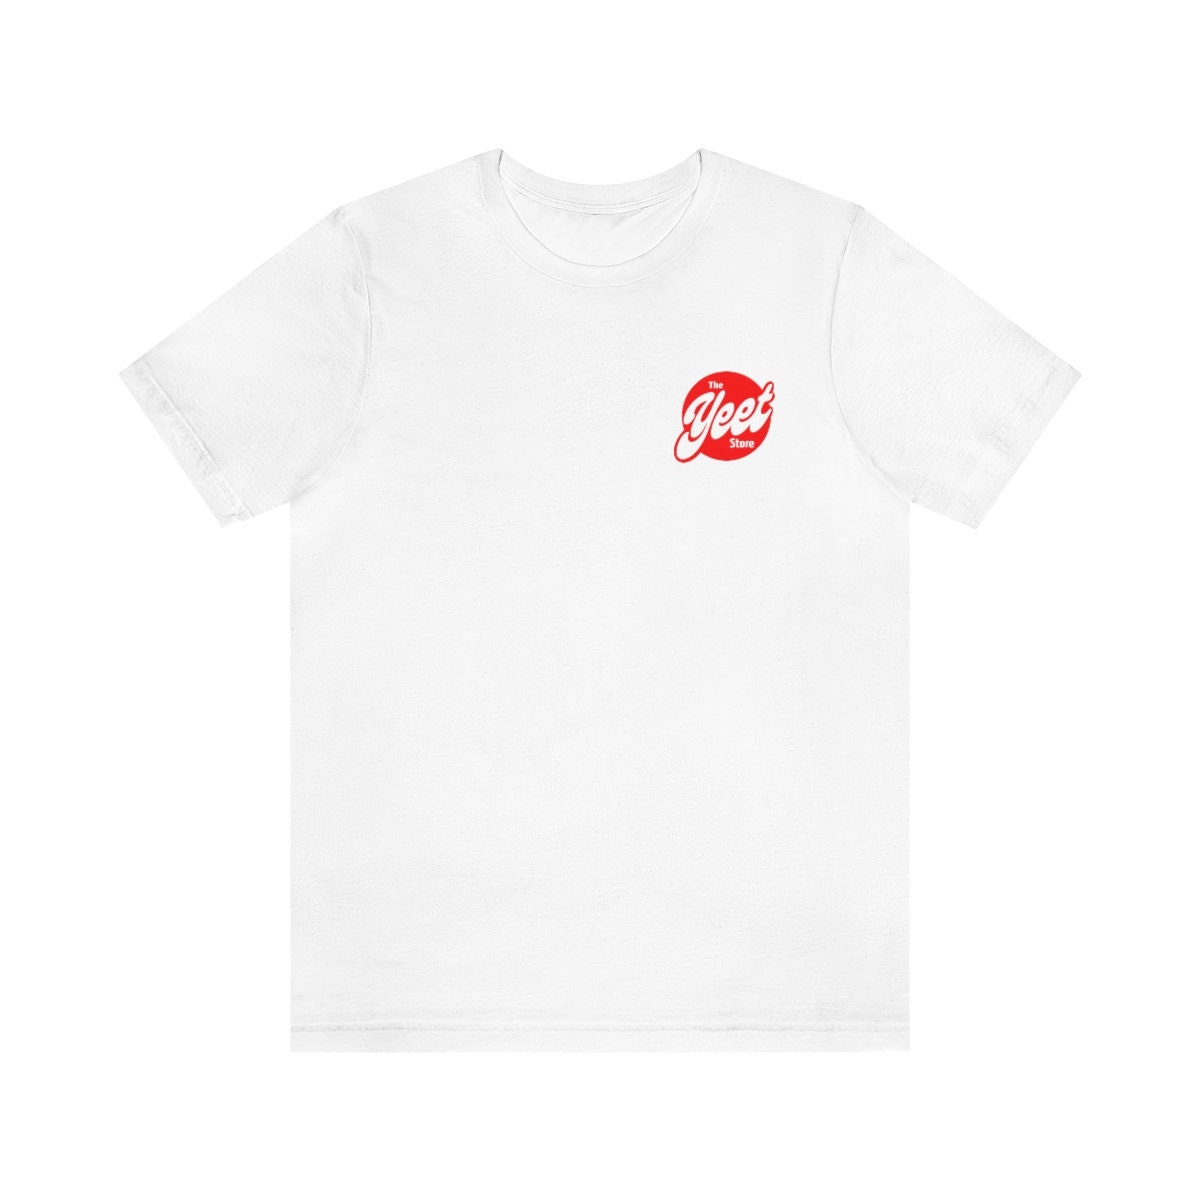 Discover The Yeet Store Shirt, Retro Font Shirt, Christmas Gift